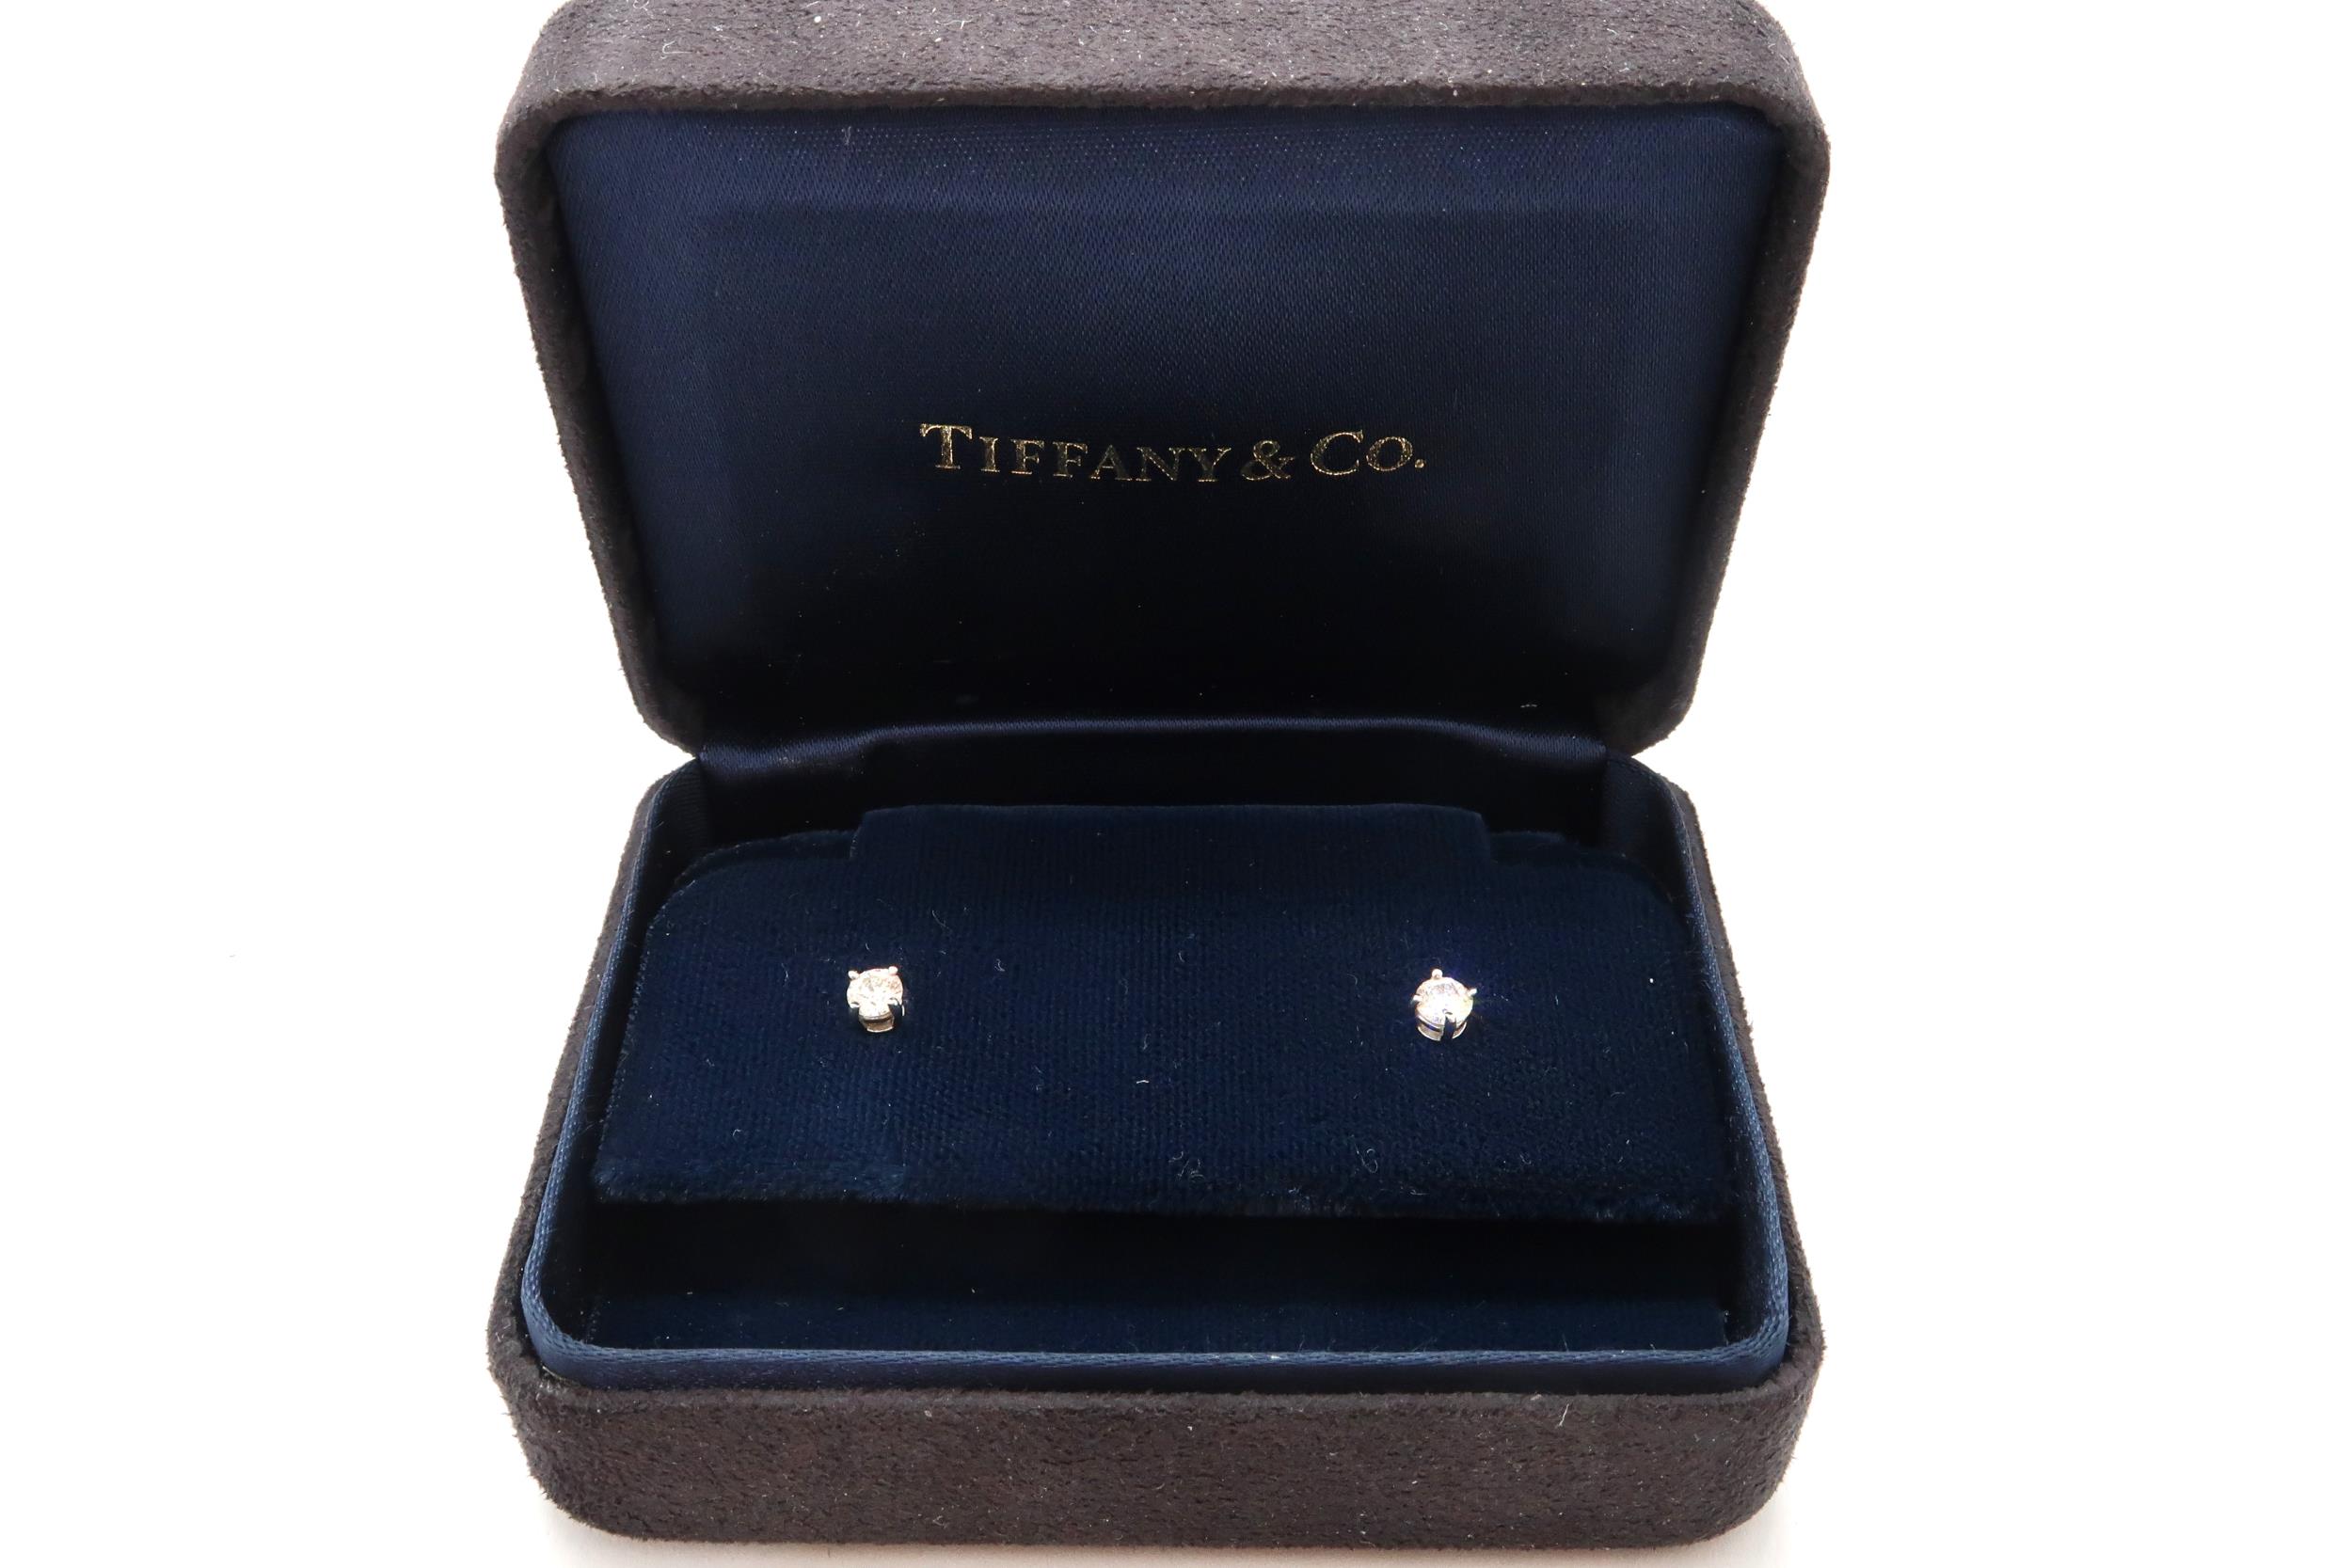 A pair of Tiffany diamond stud earrings, in Tiffany box